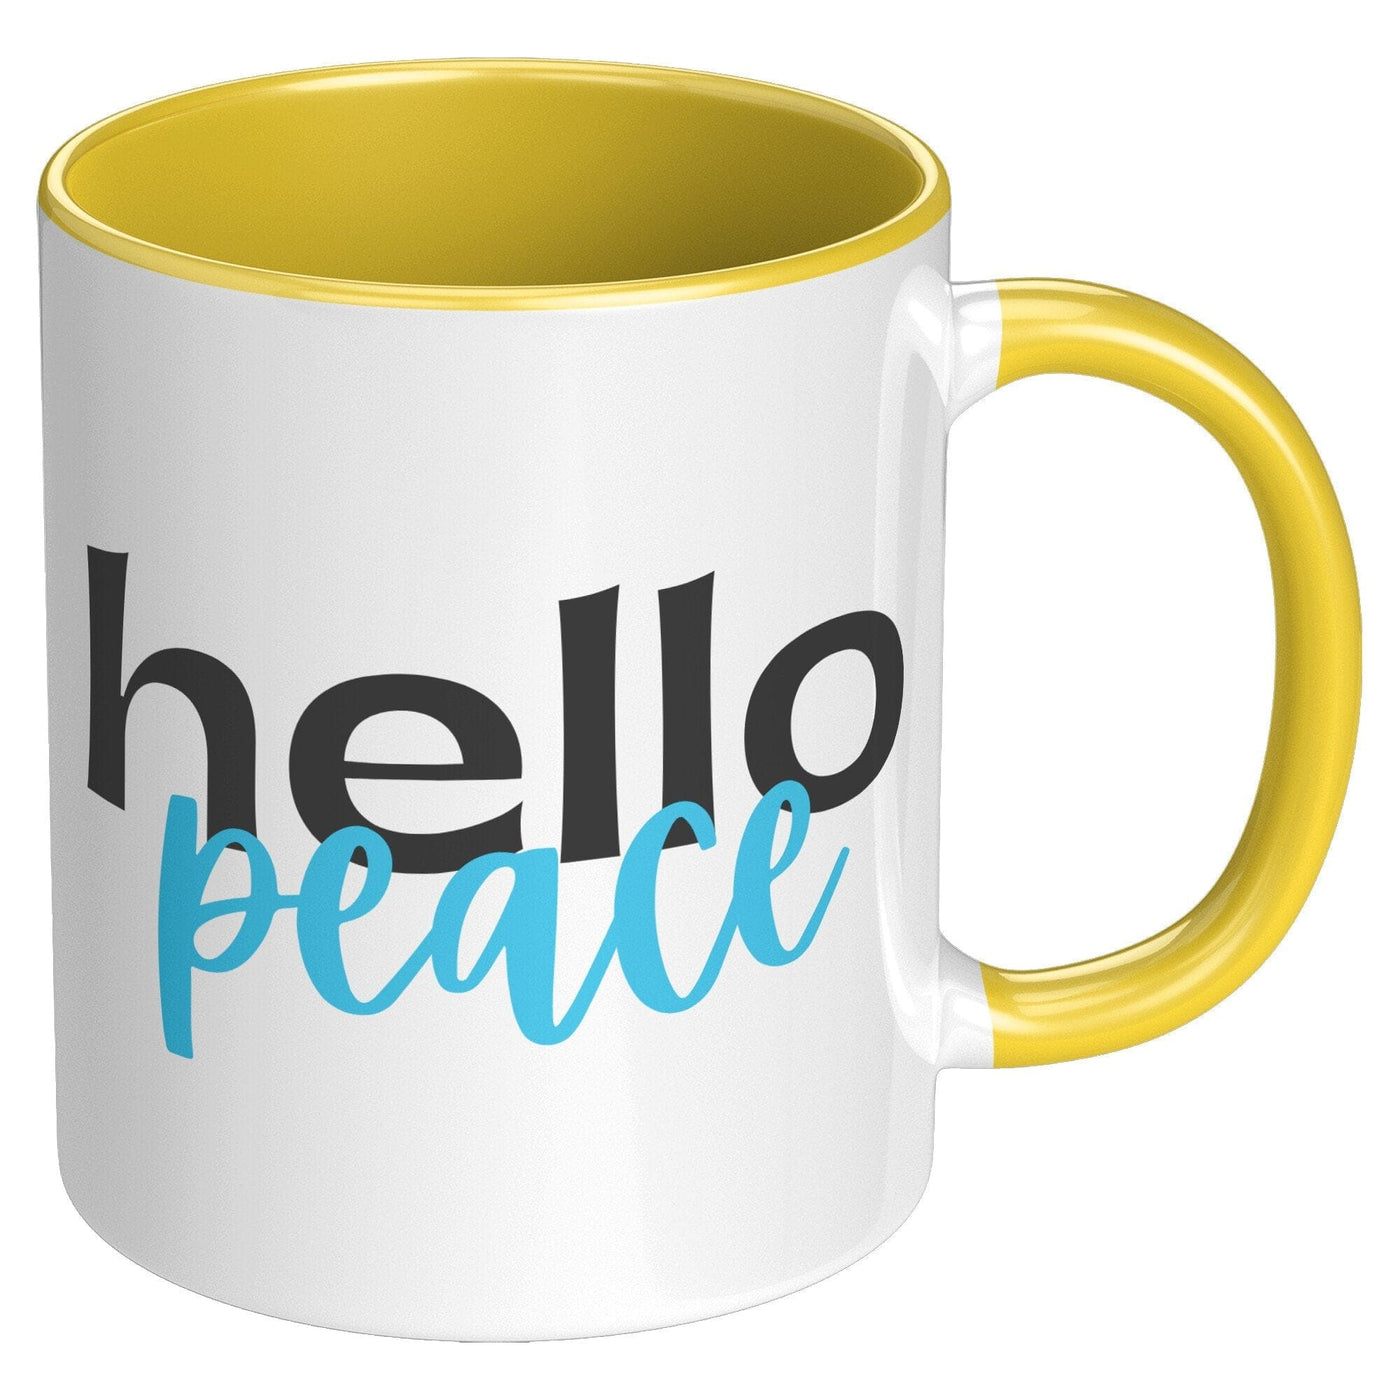 Coffee Cup Accent Ceramic Mug 11oz Hello Peace Light Blue - Decorative